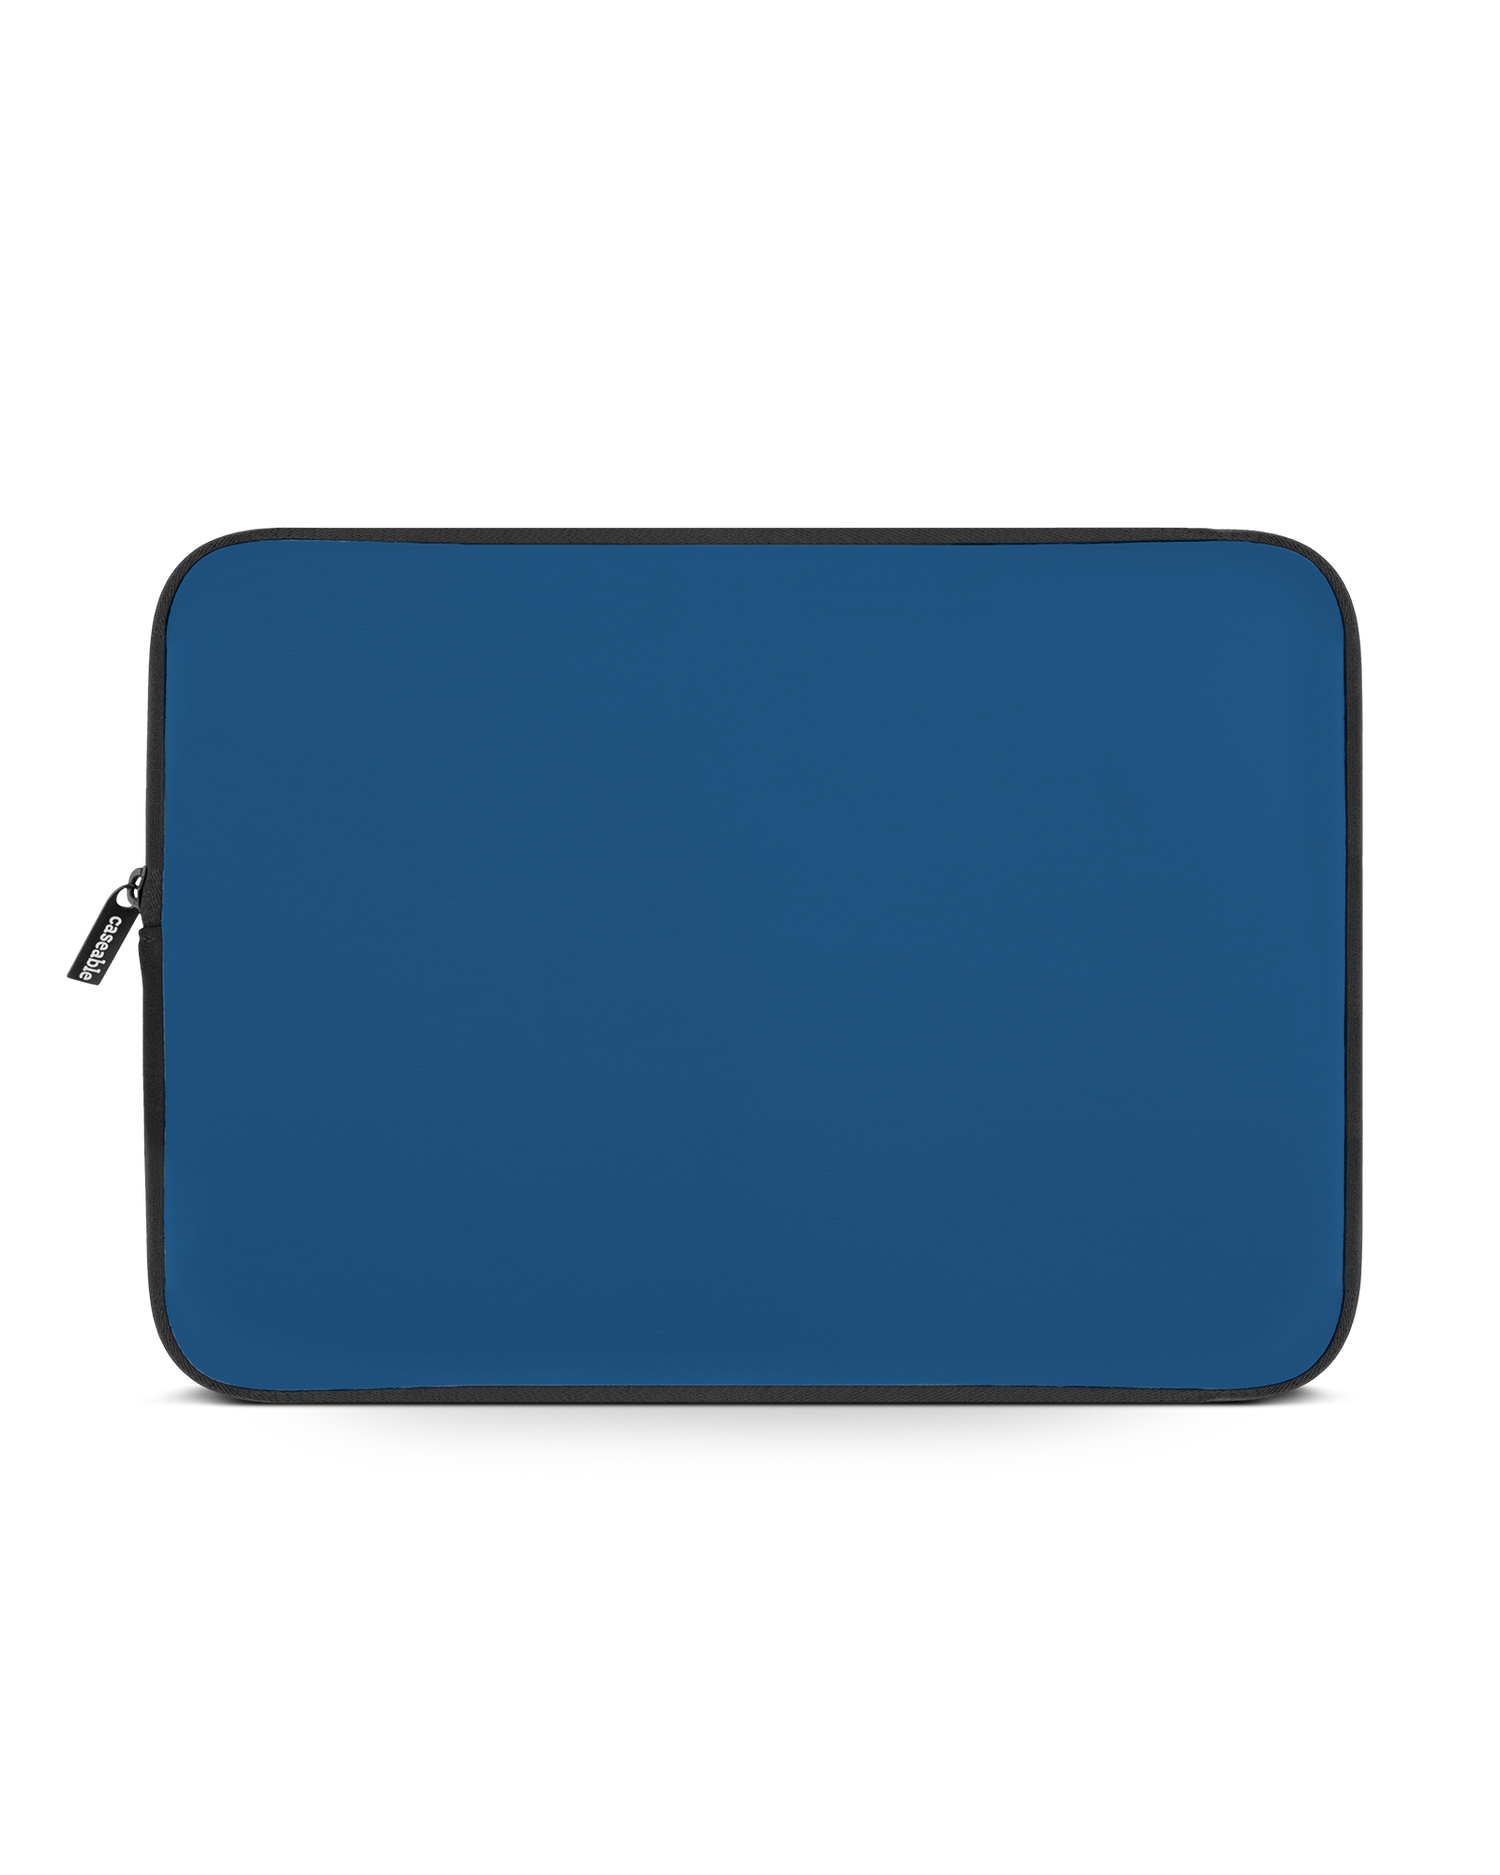 CLASSIC BLUE Laptophülle 14-15 Zoll: Vorderansicht